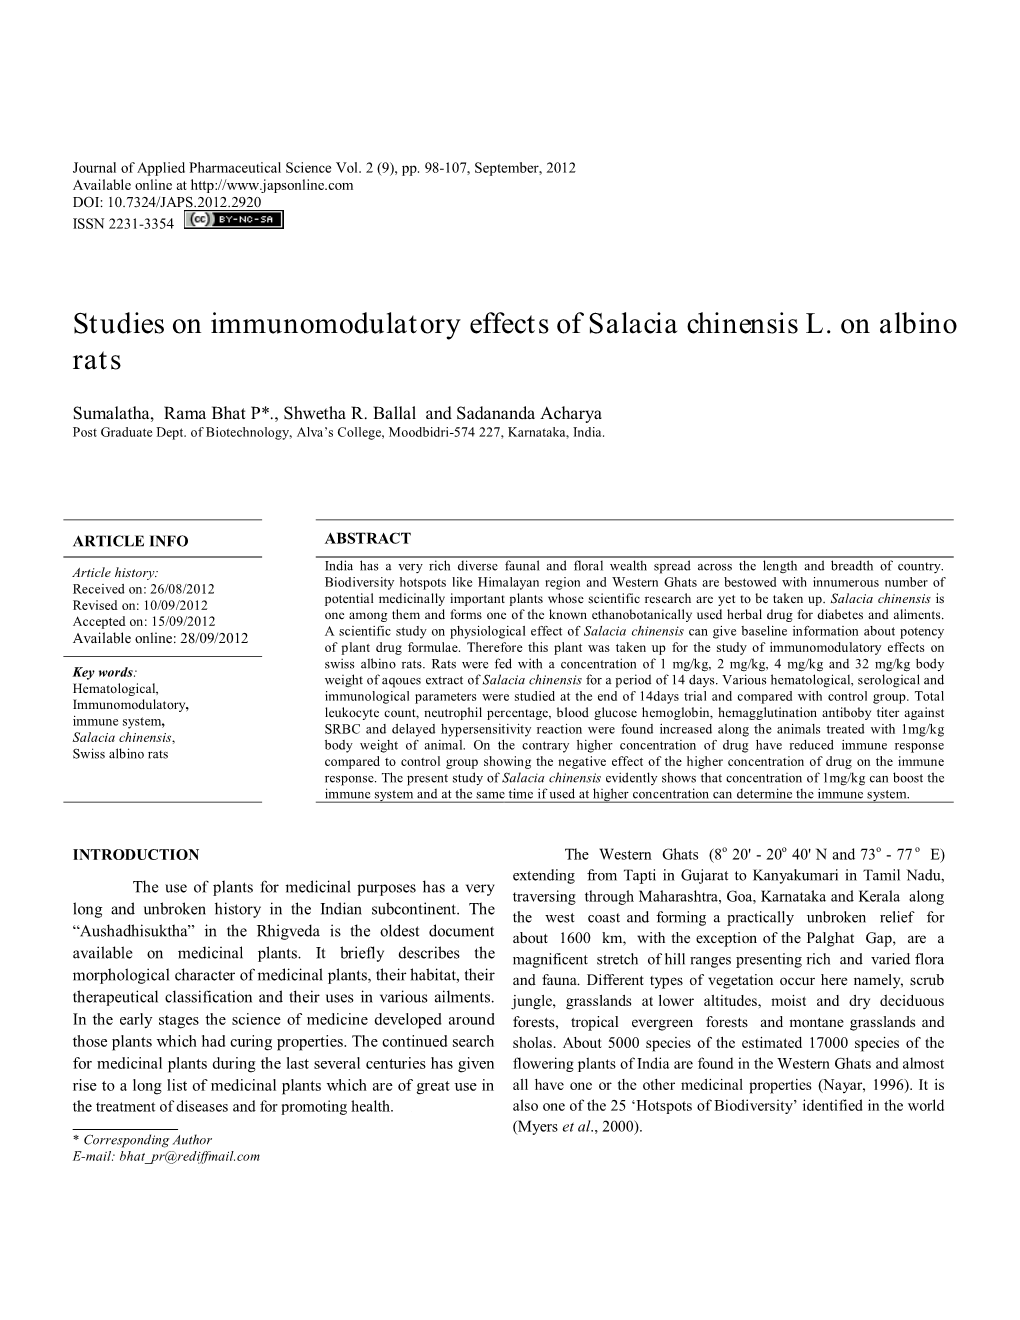 Studies on Immunomodulatory Effects of Salacia Chinensis L. on Albino Rats